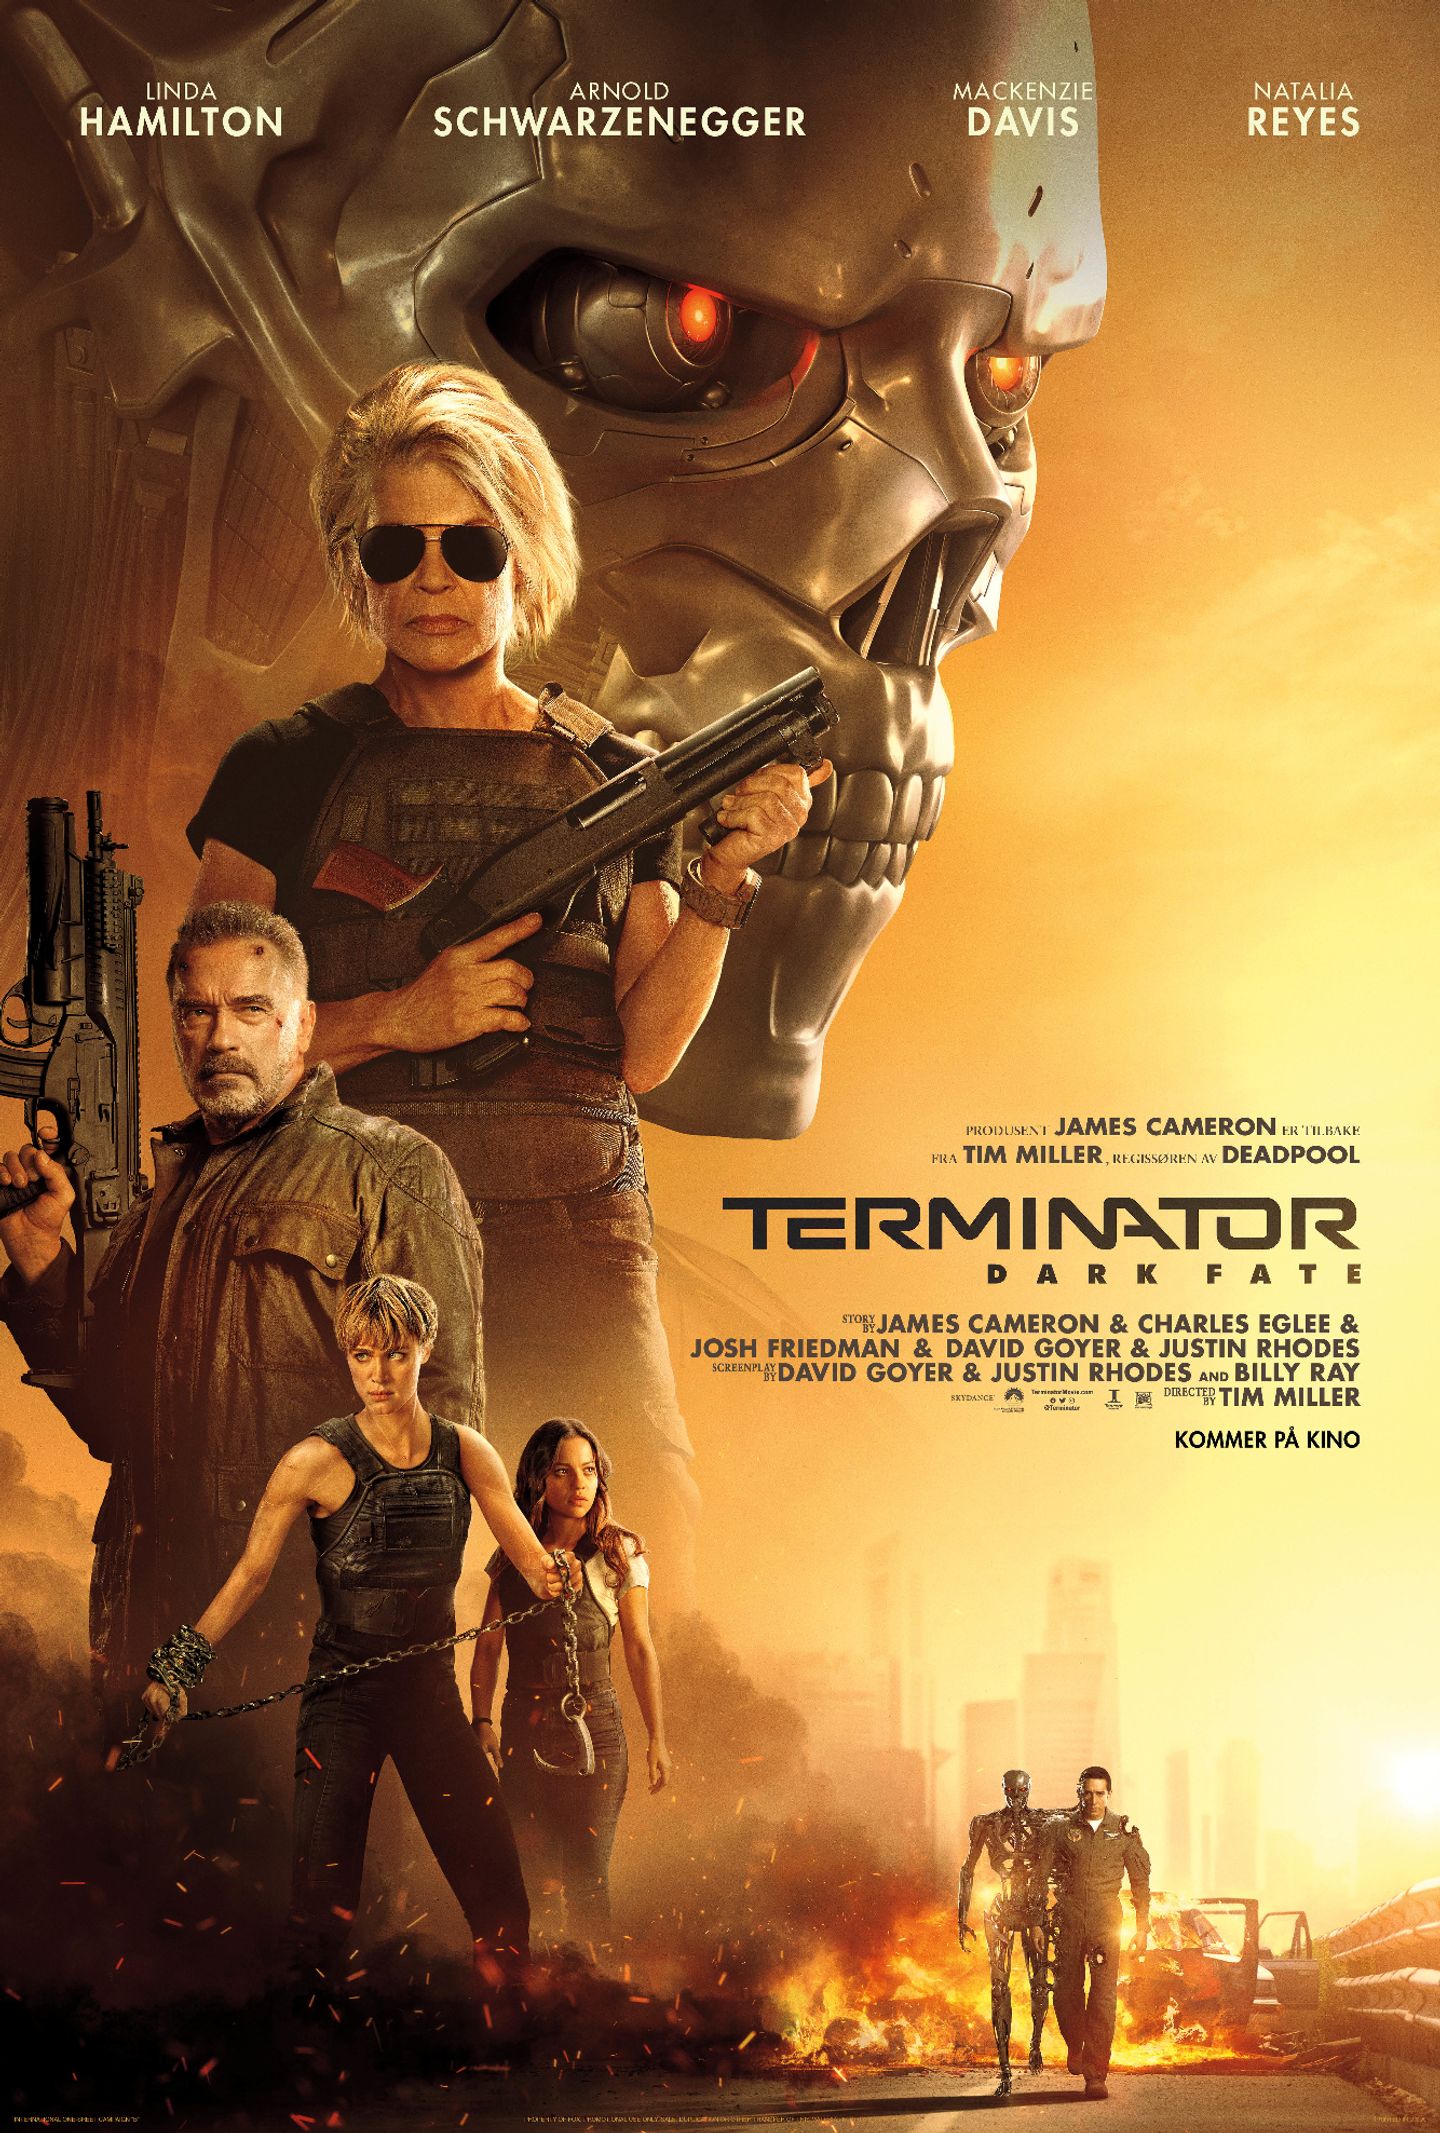 Plakat for 'Terminator: Dark Fate'